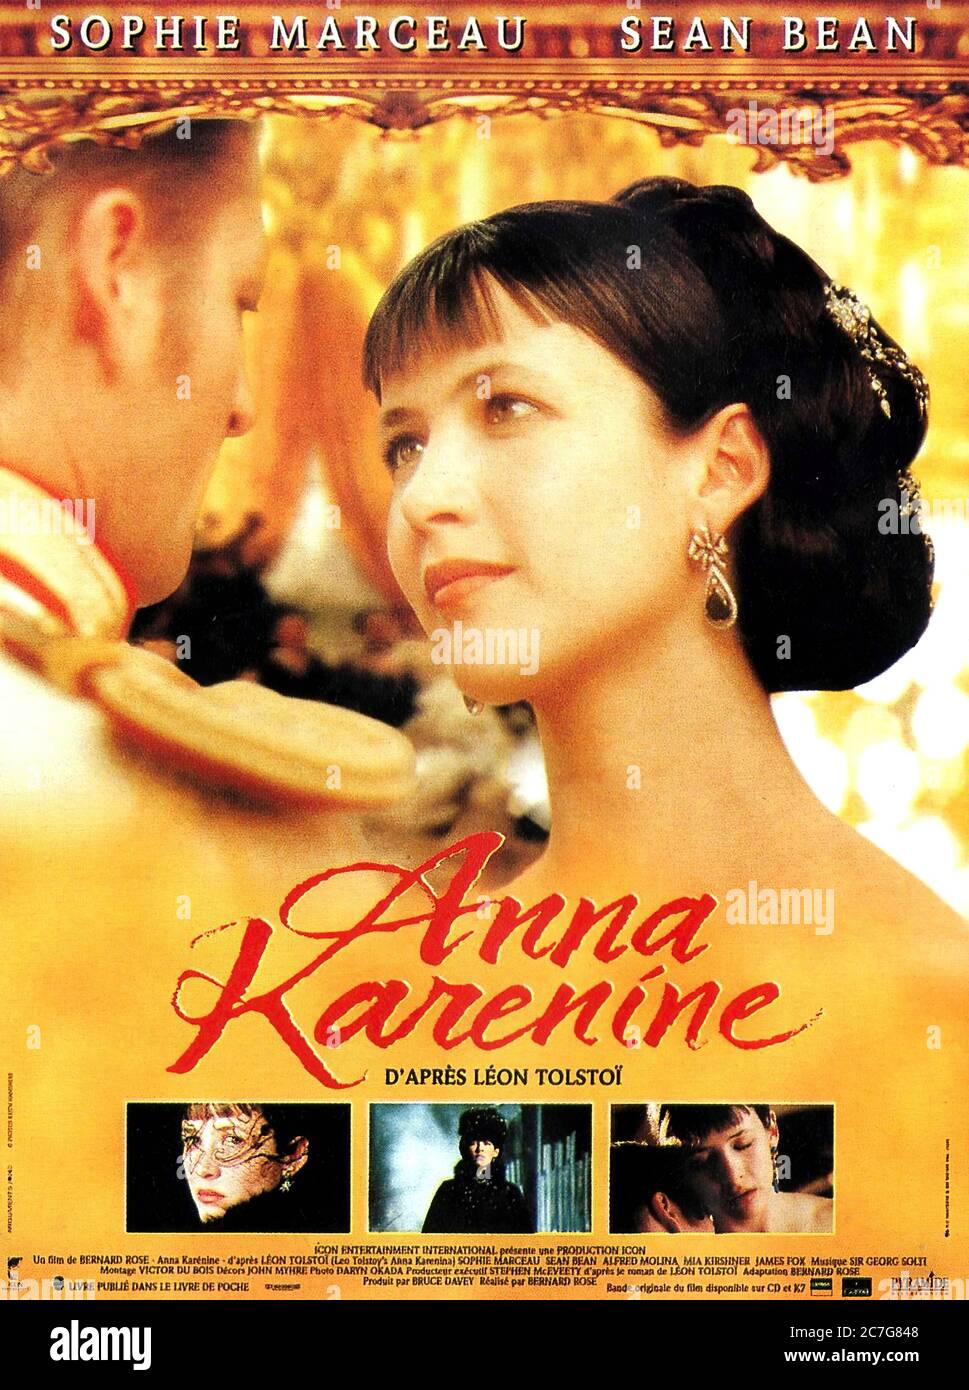 Anna Karenine - Movie Poster Stock Photo